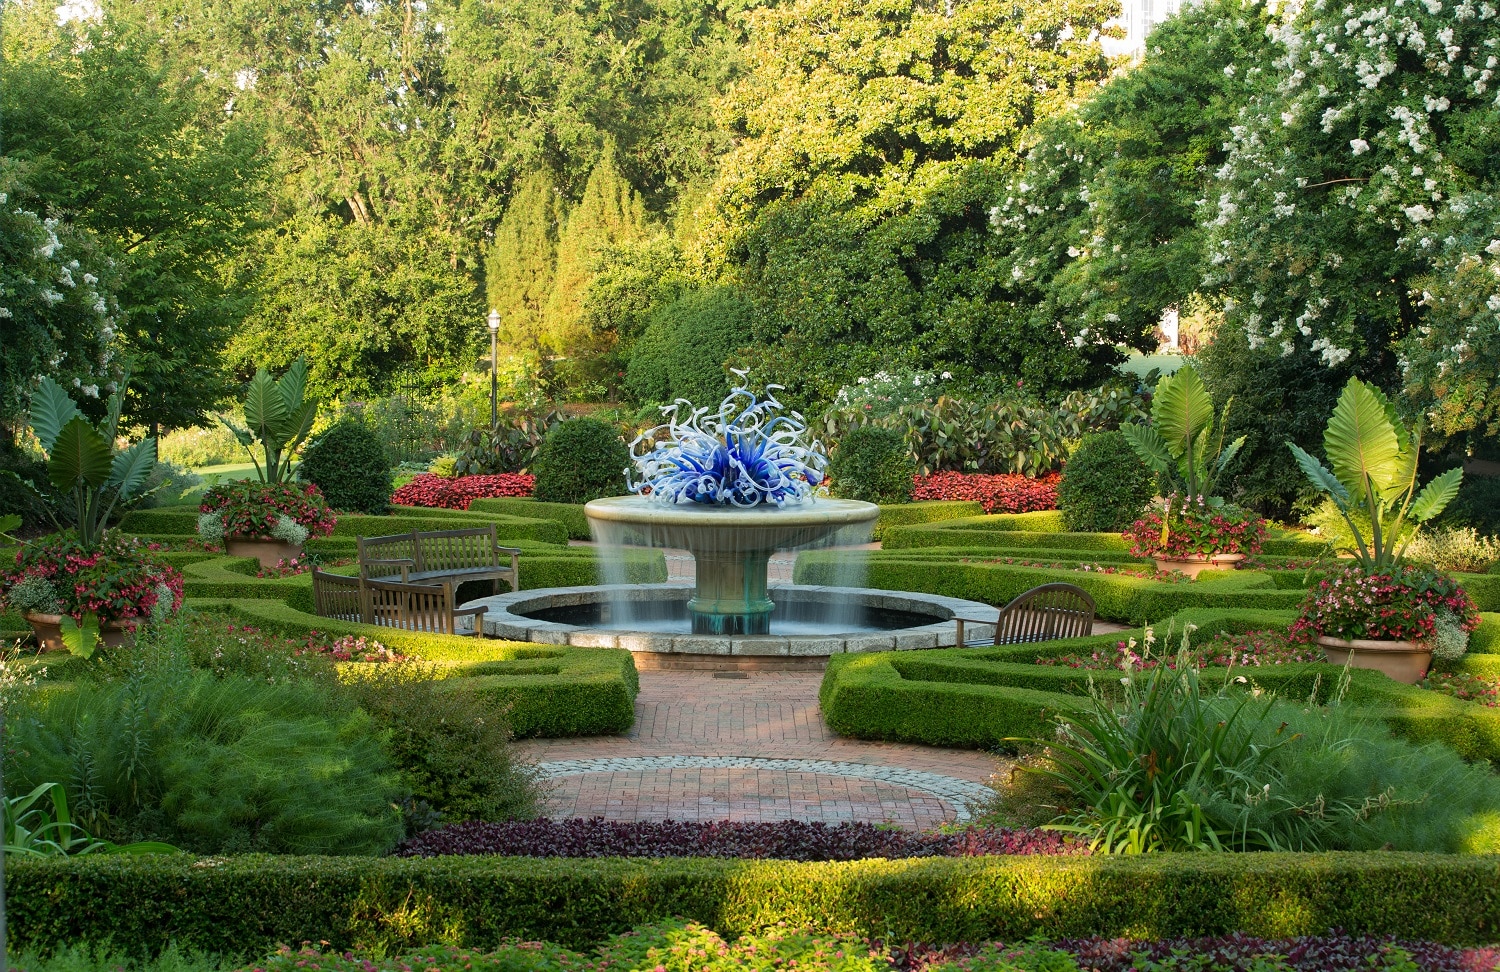 4 Of The Best Ways To Enjoy The Atlanta Botanical Garden By